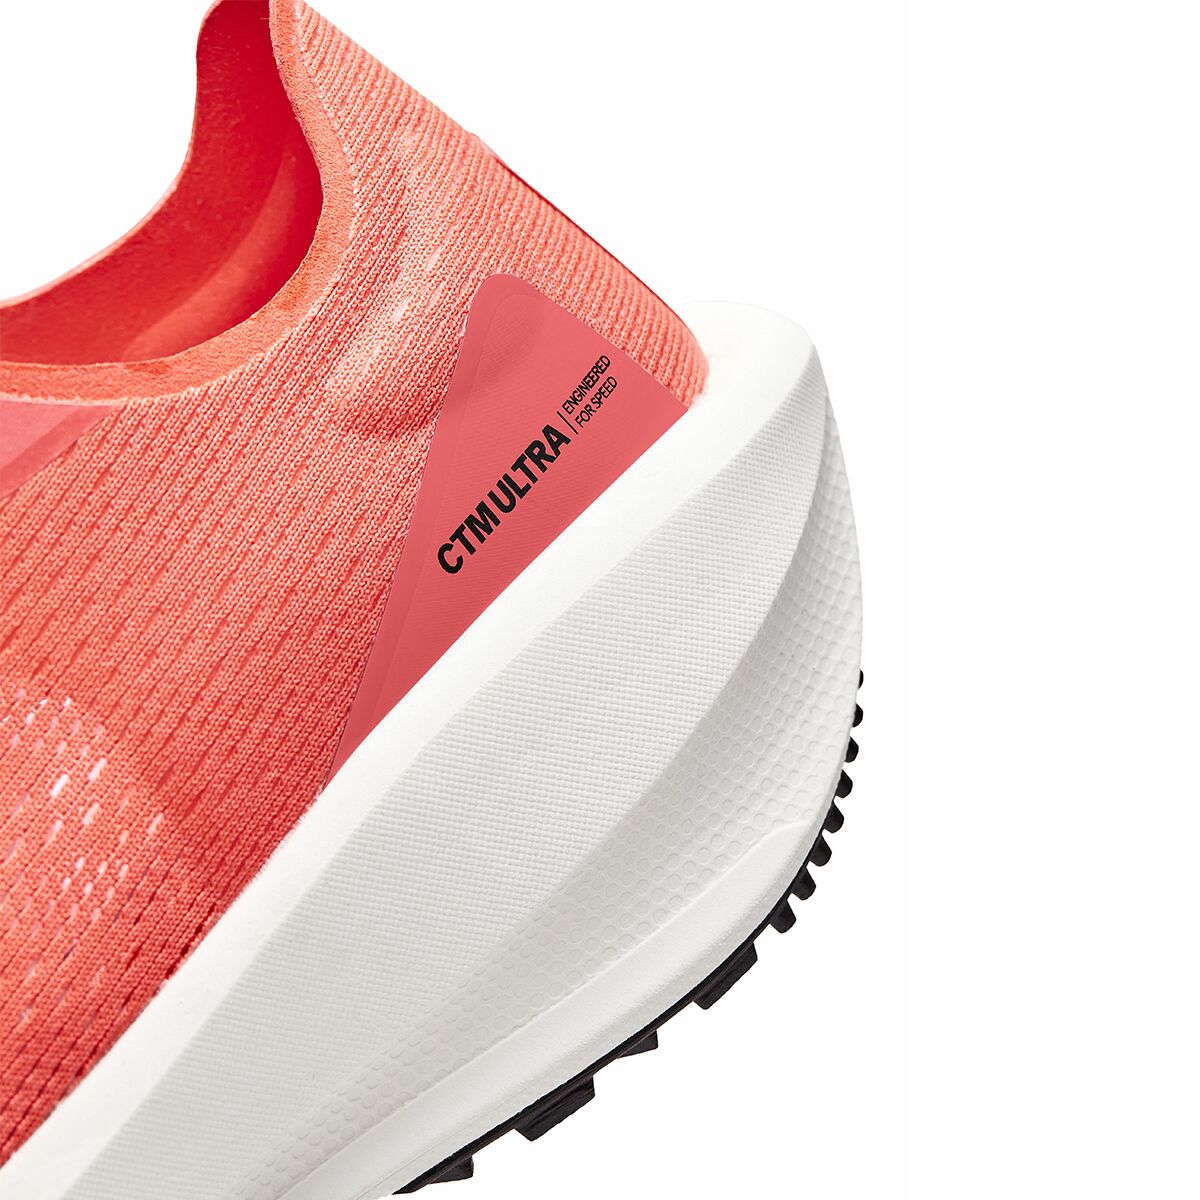 Craft CTM Ultra 2 Running Shoe - Women's - Footwear